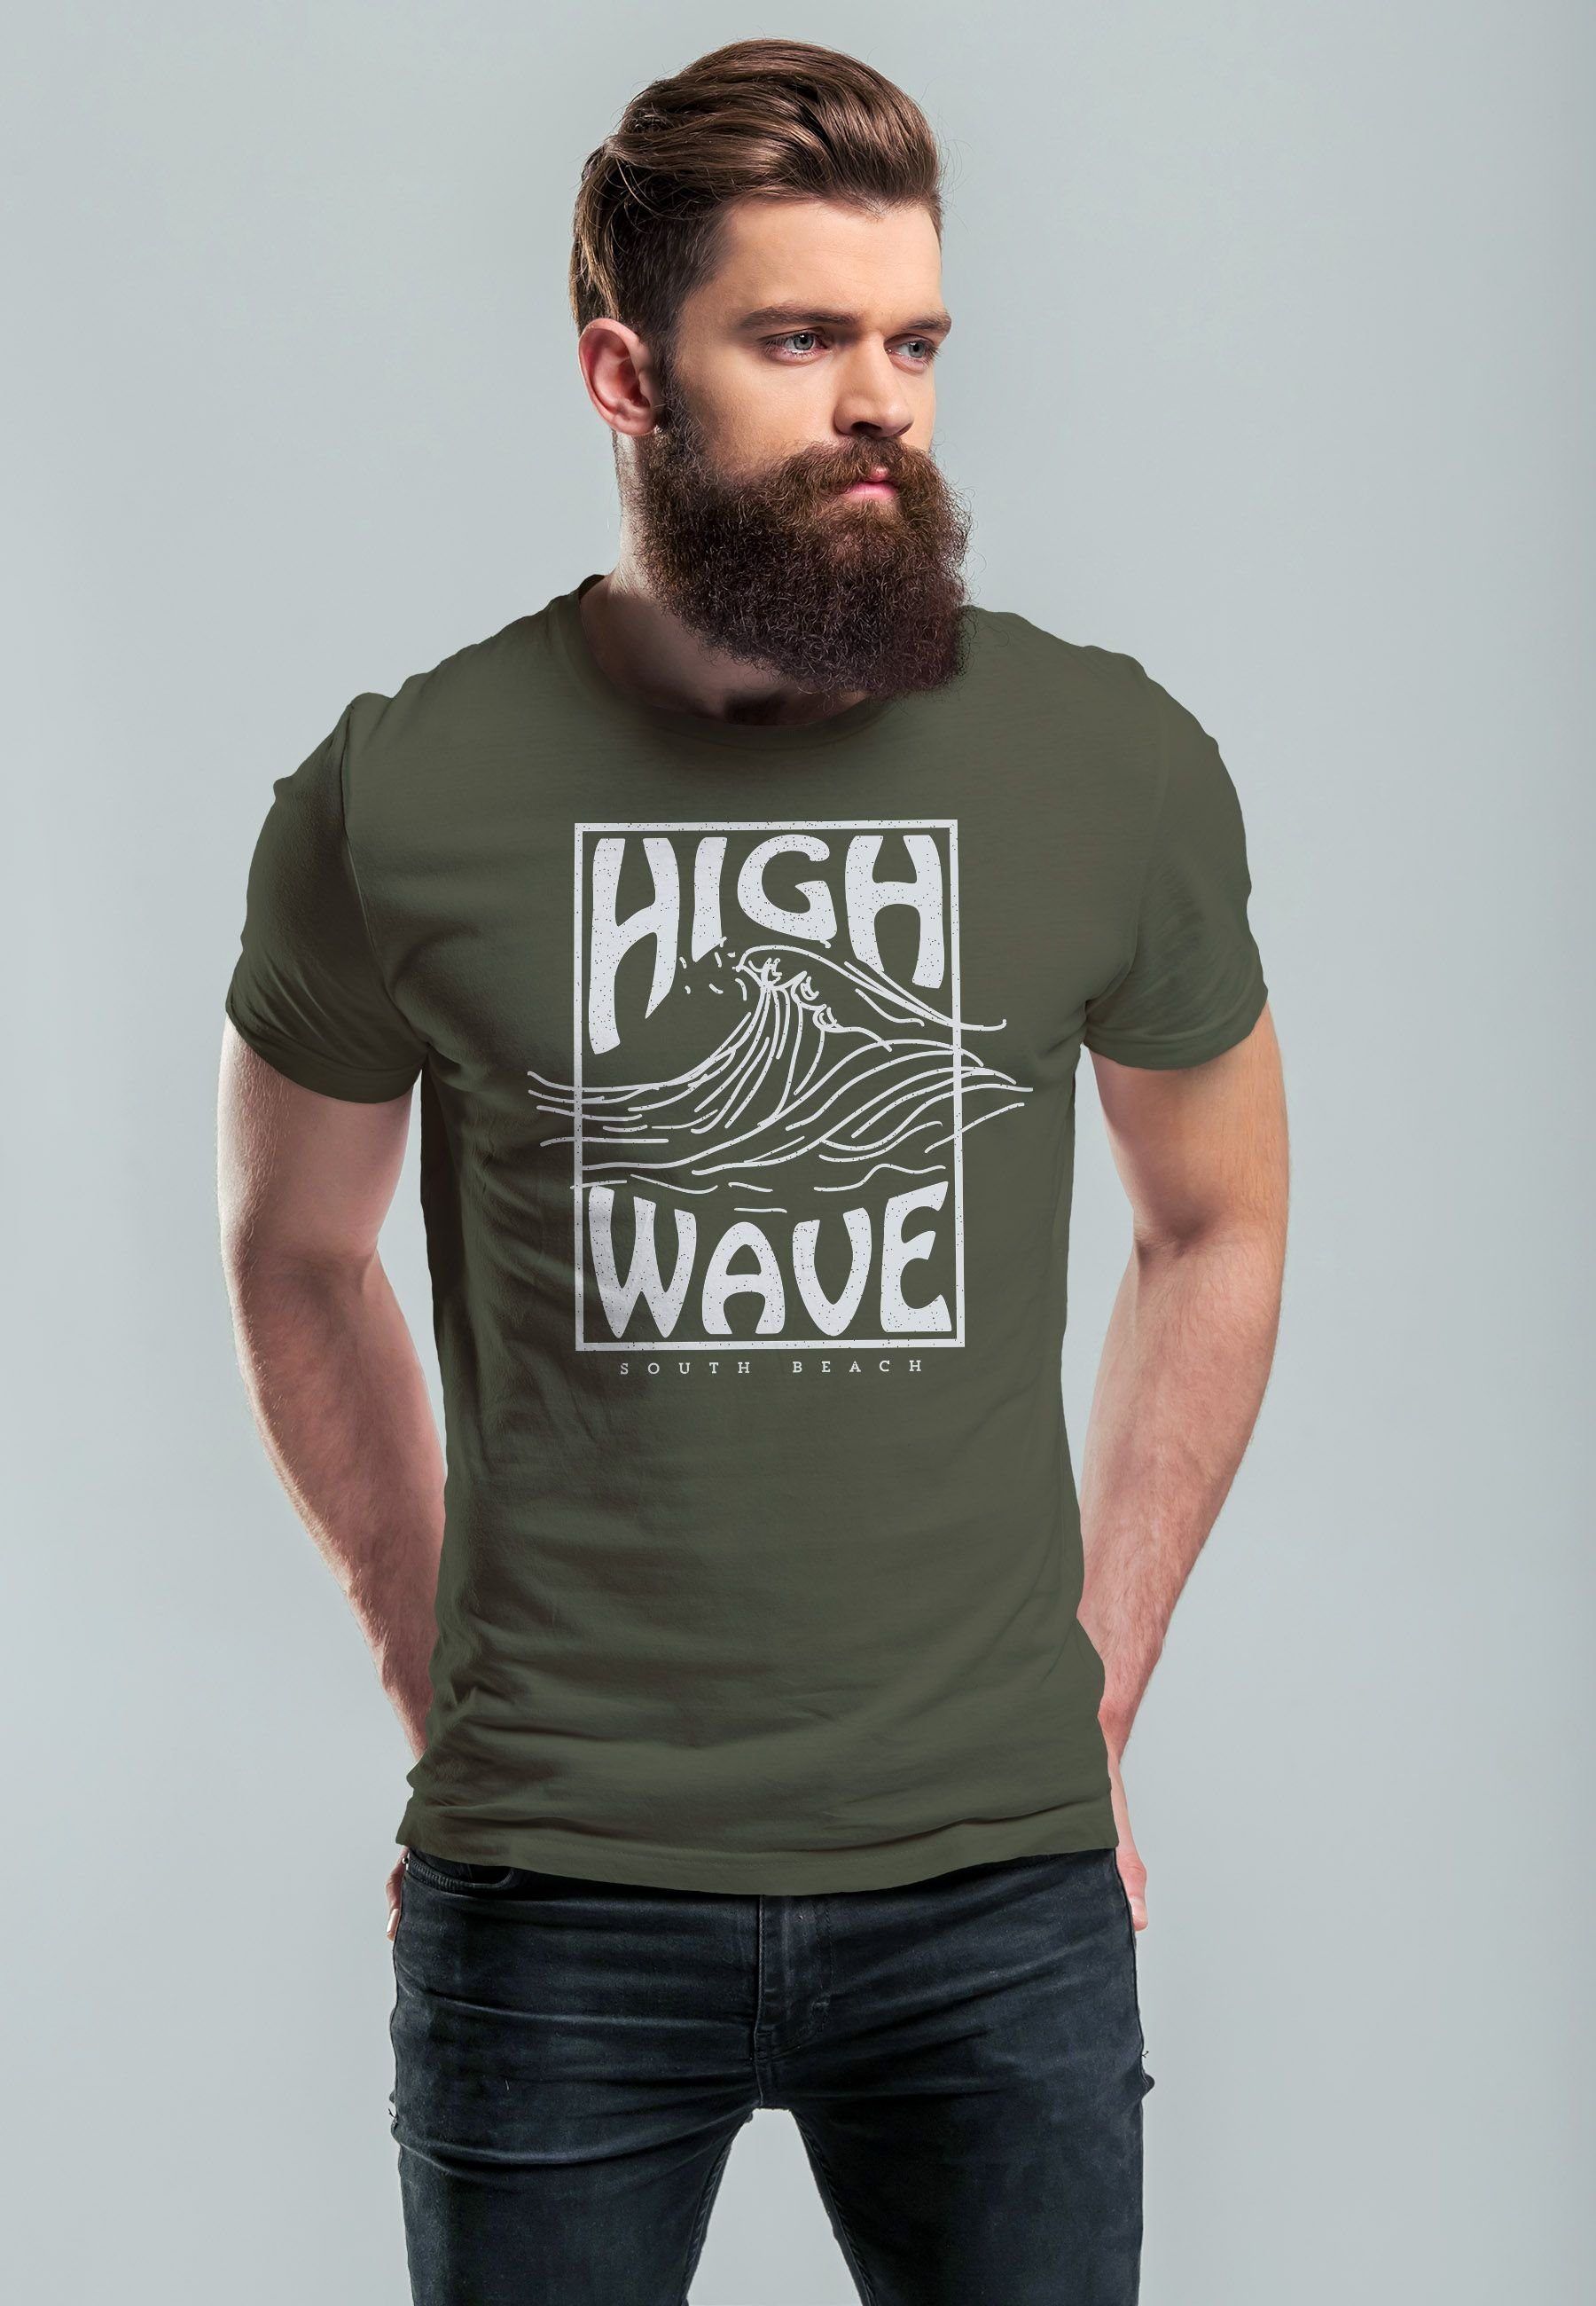 Neverless Print-Shirt Herren T-Shirt Logo Print High Wave Art Welle Line Surfing mit Schrift Aufdruck army